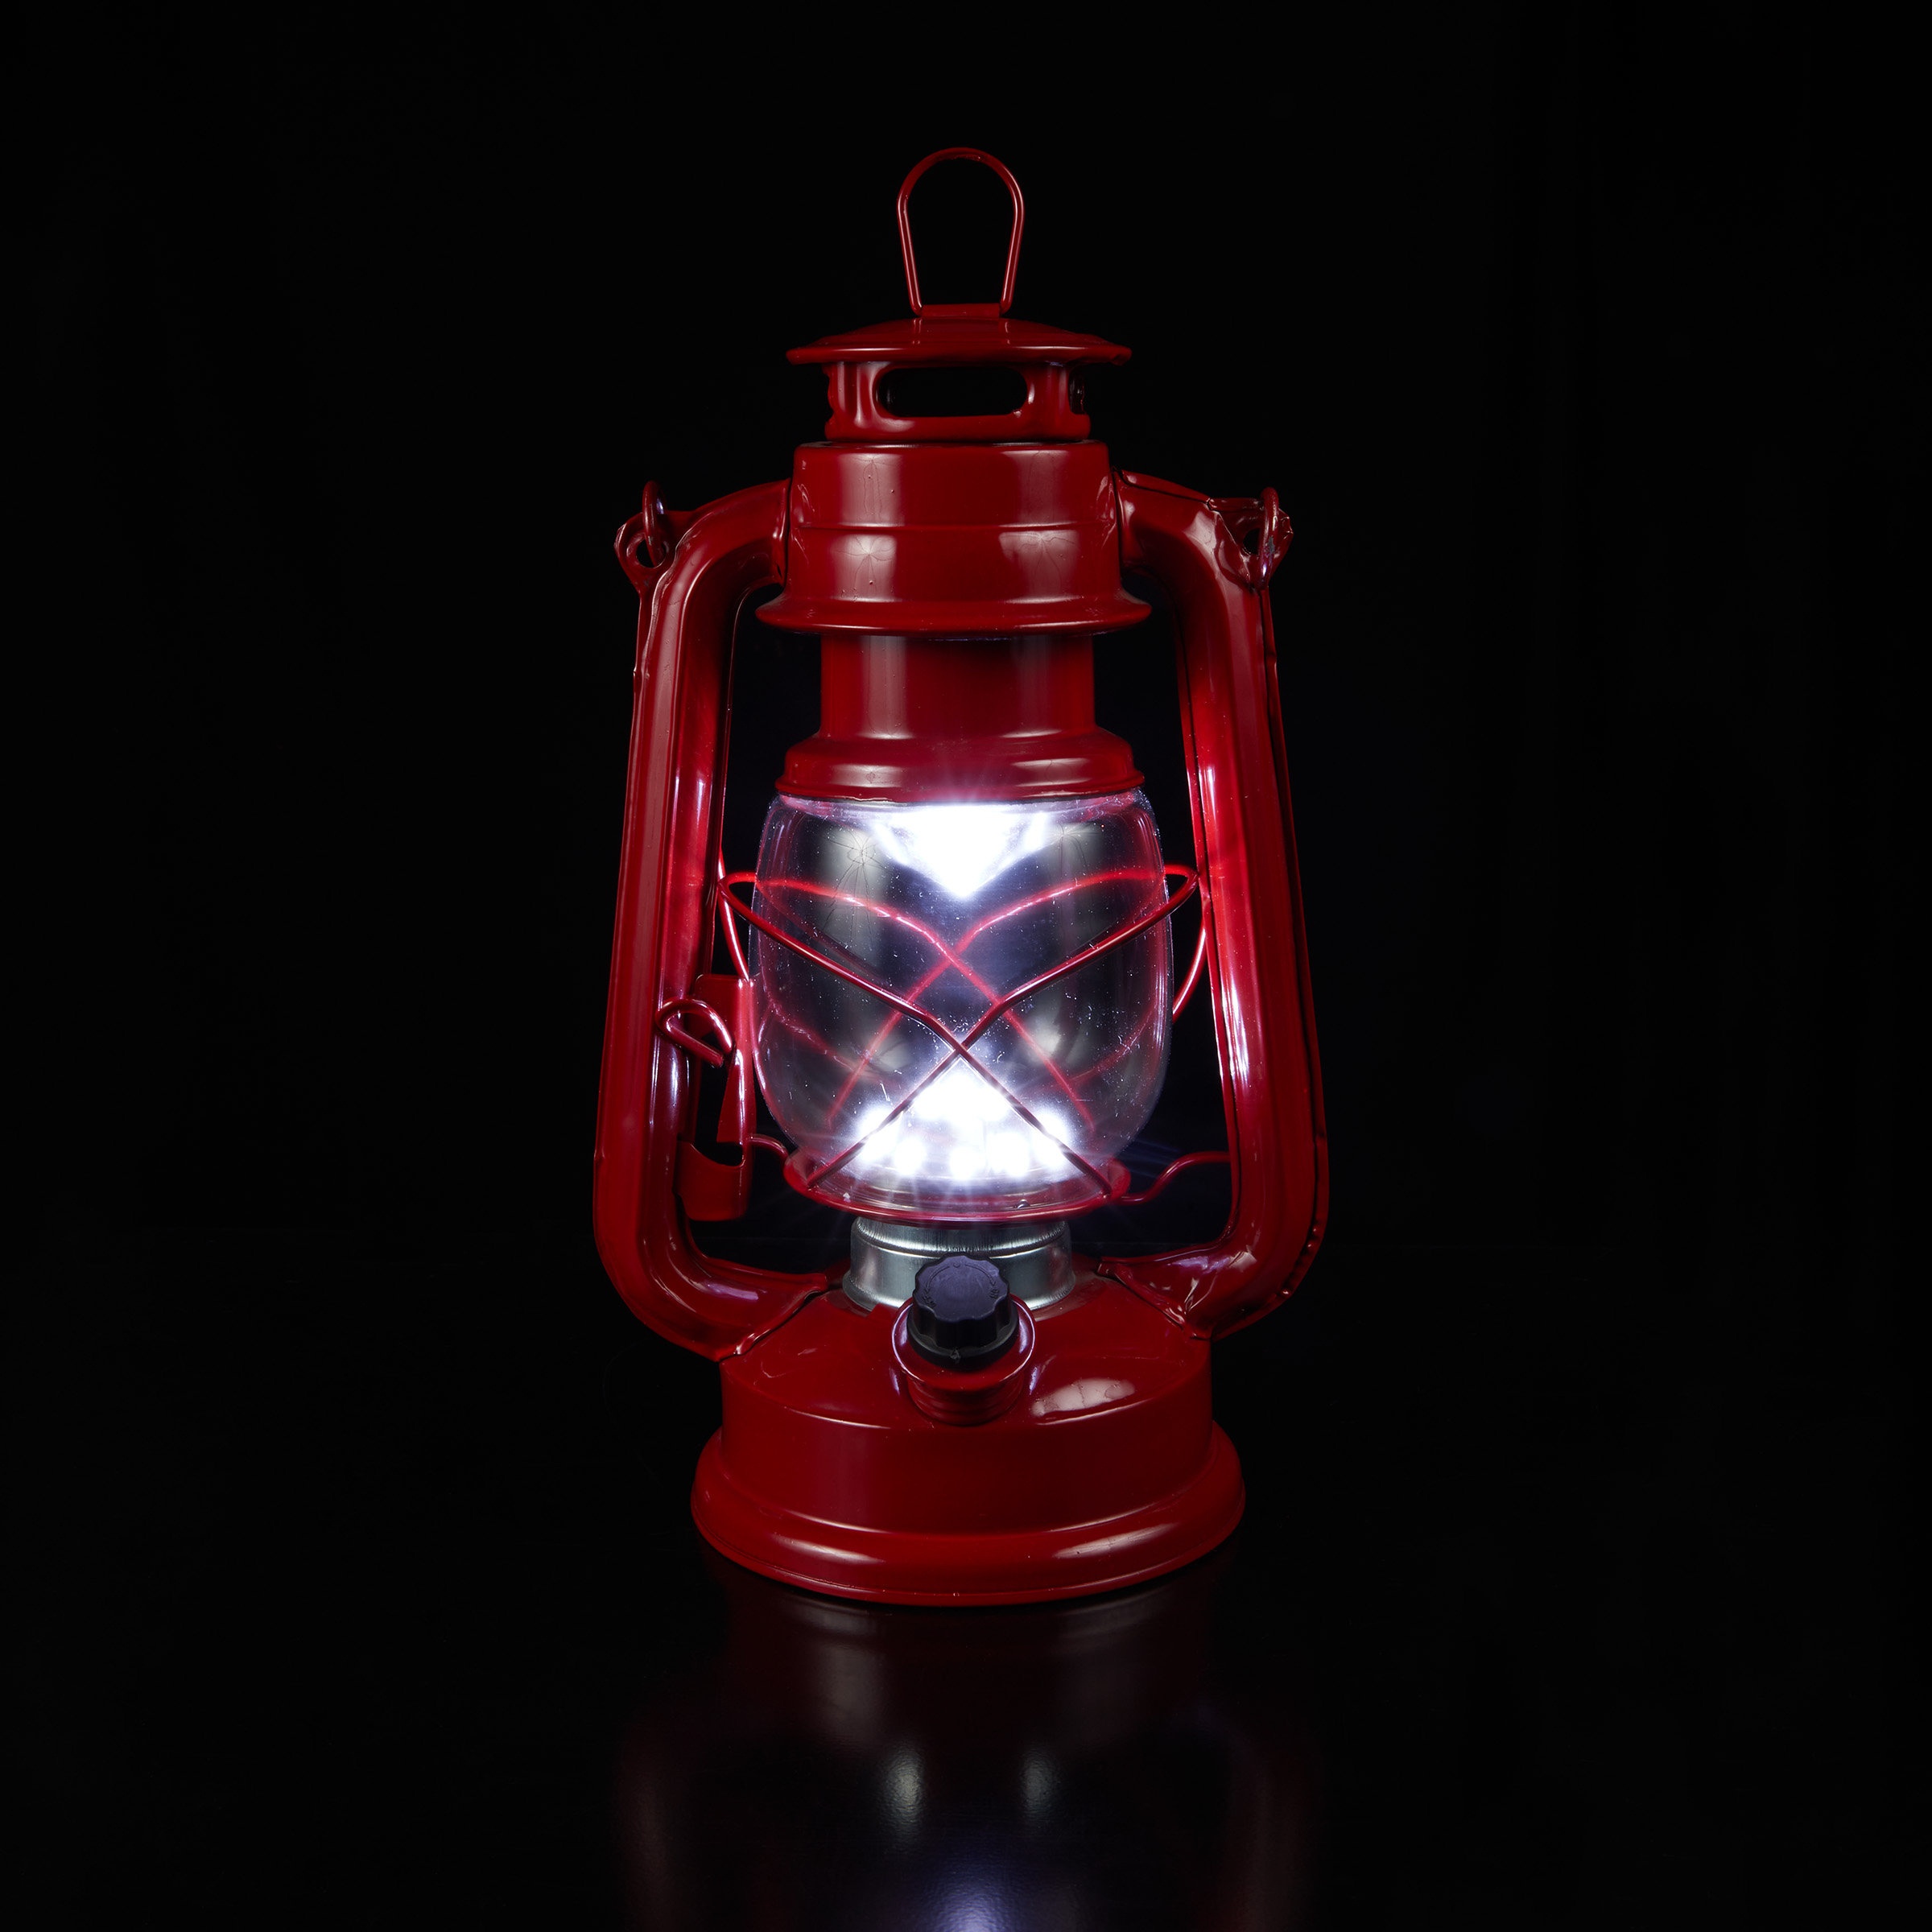 12 Black Battery Operated Faux Flame LED Hurricane Lantern